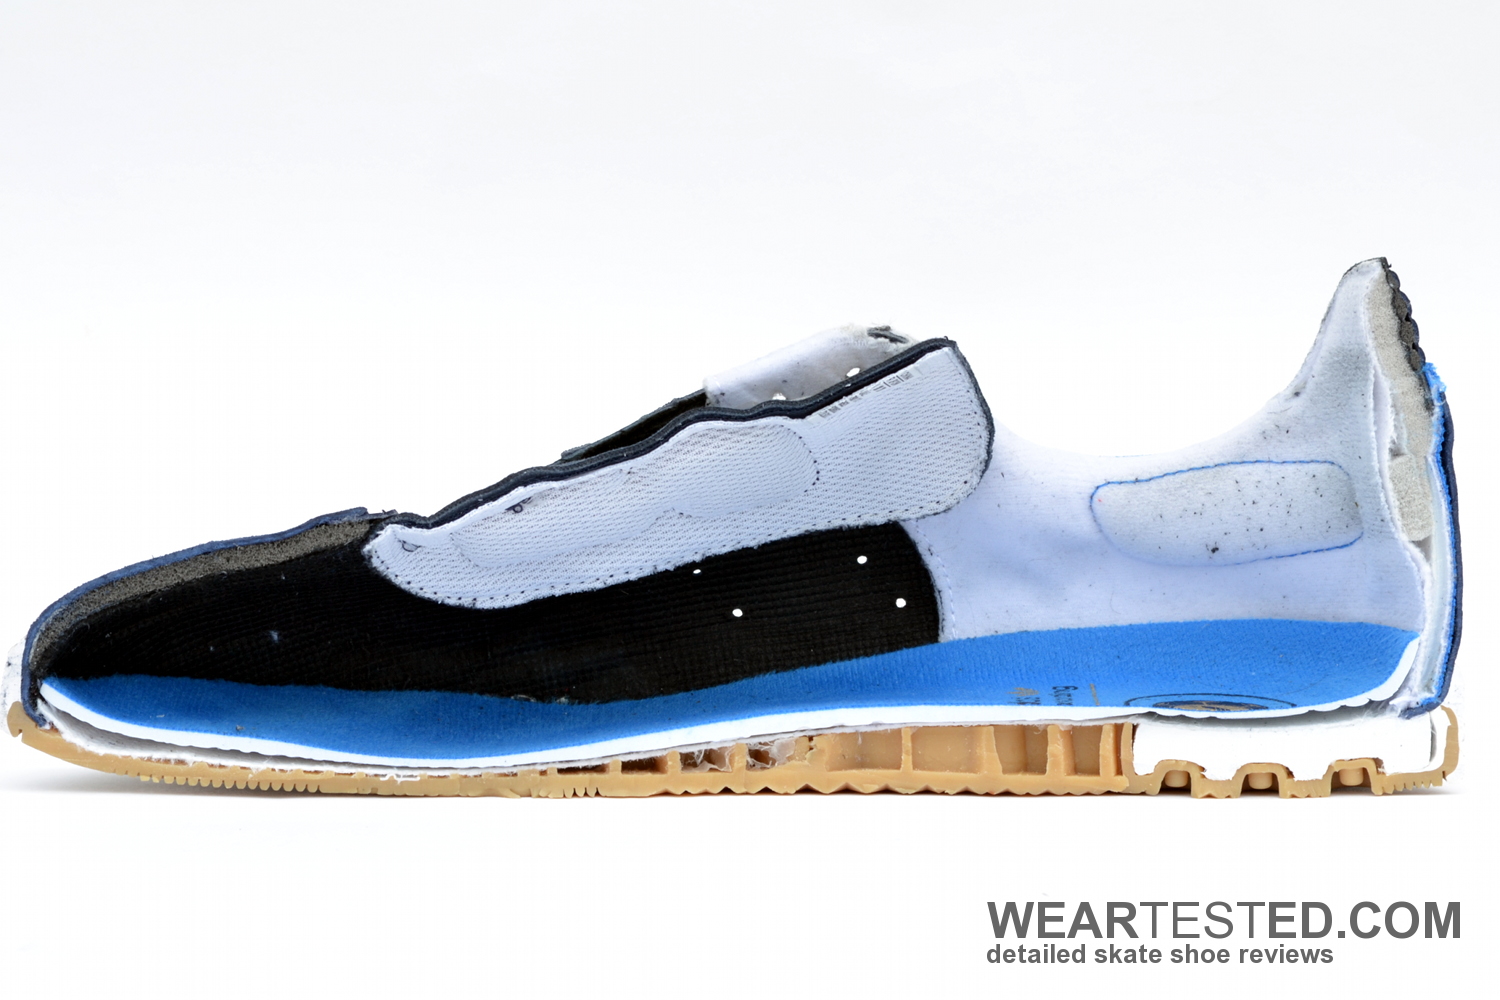 adidas Weartested - detailed skate shoe